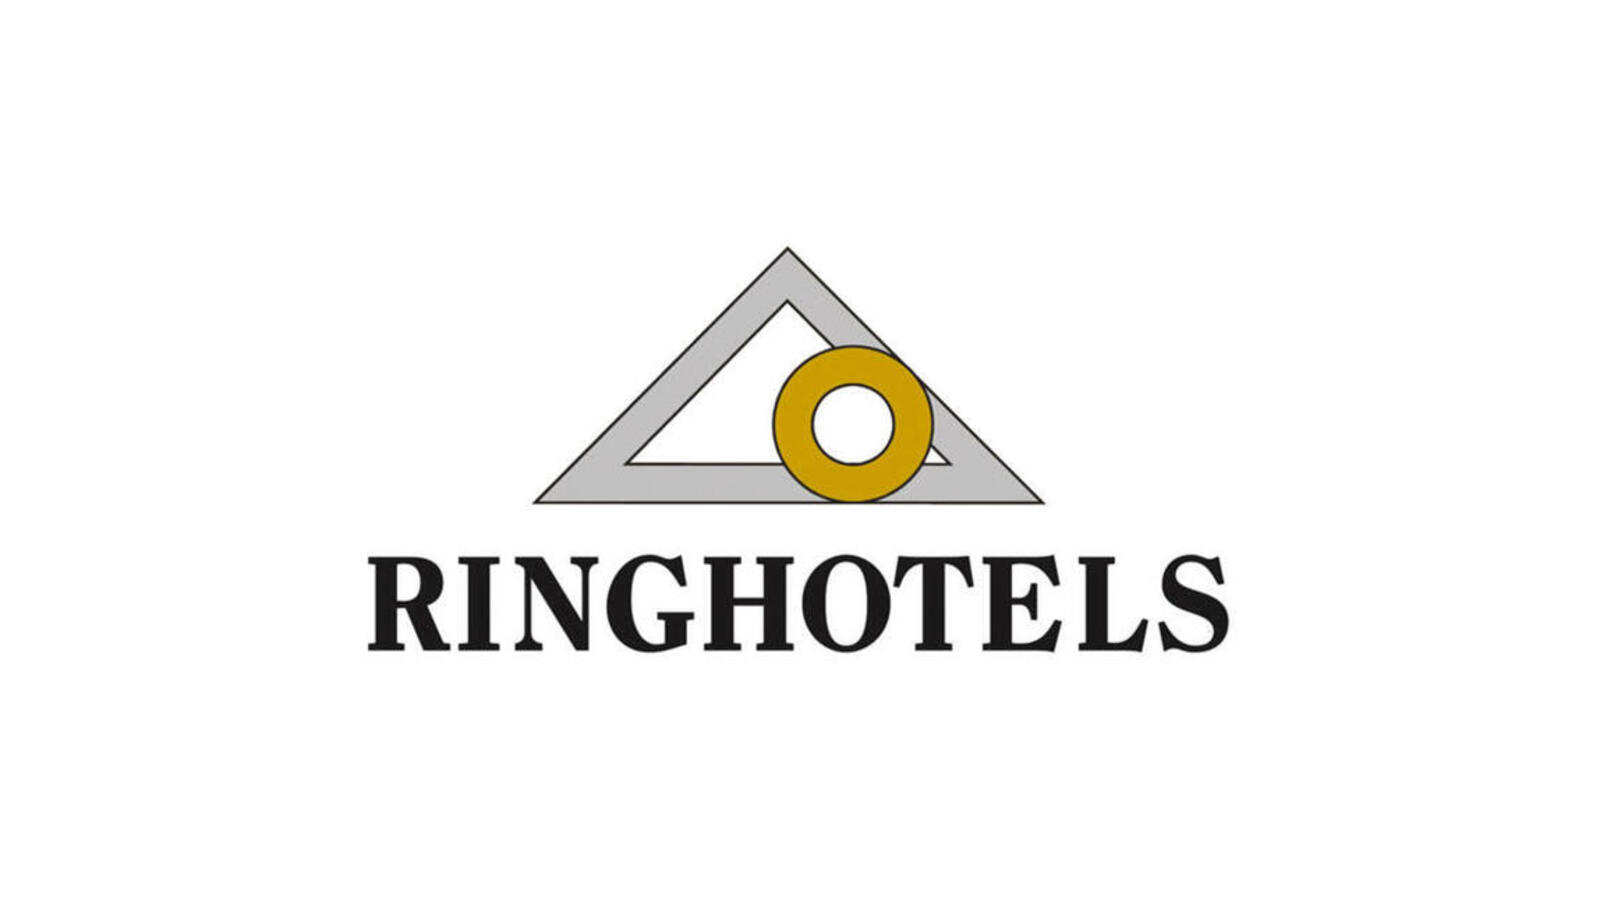 Ringhotels logo of the 90s